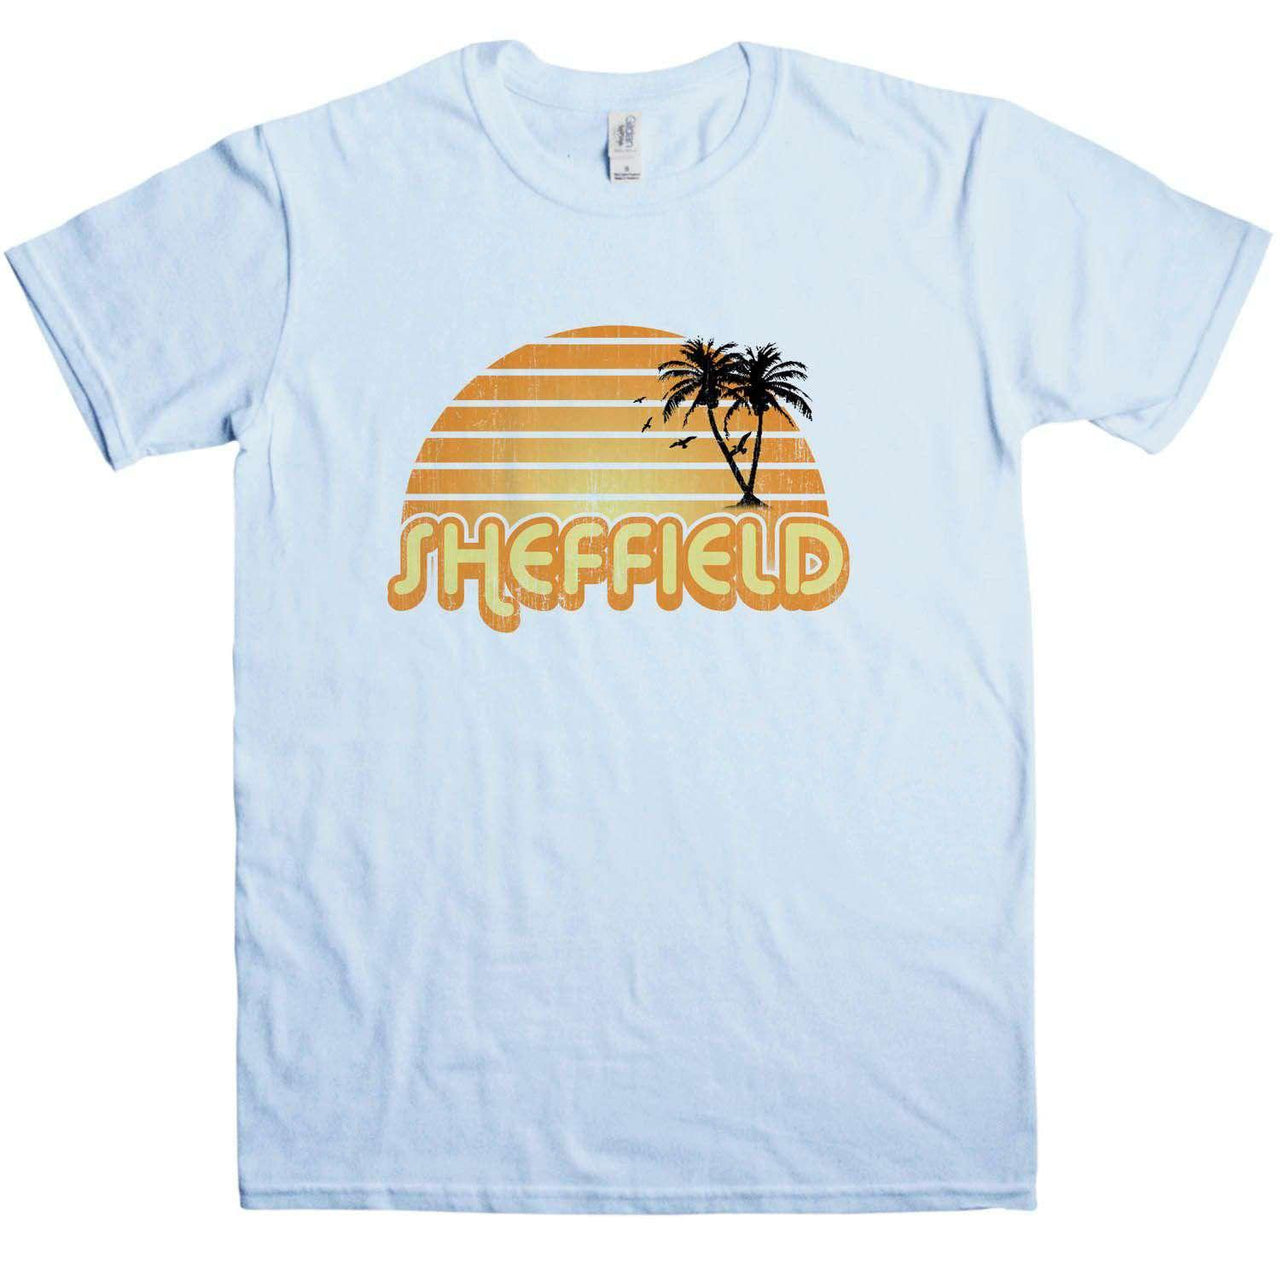 City Sunset Sheffield T-Shirt For Men 8Ball